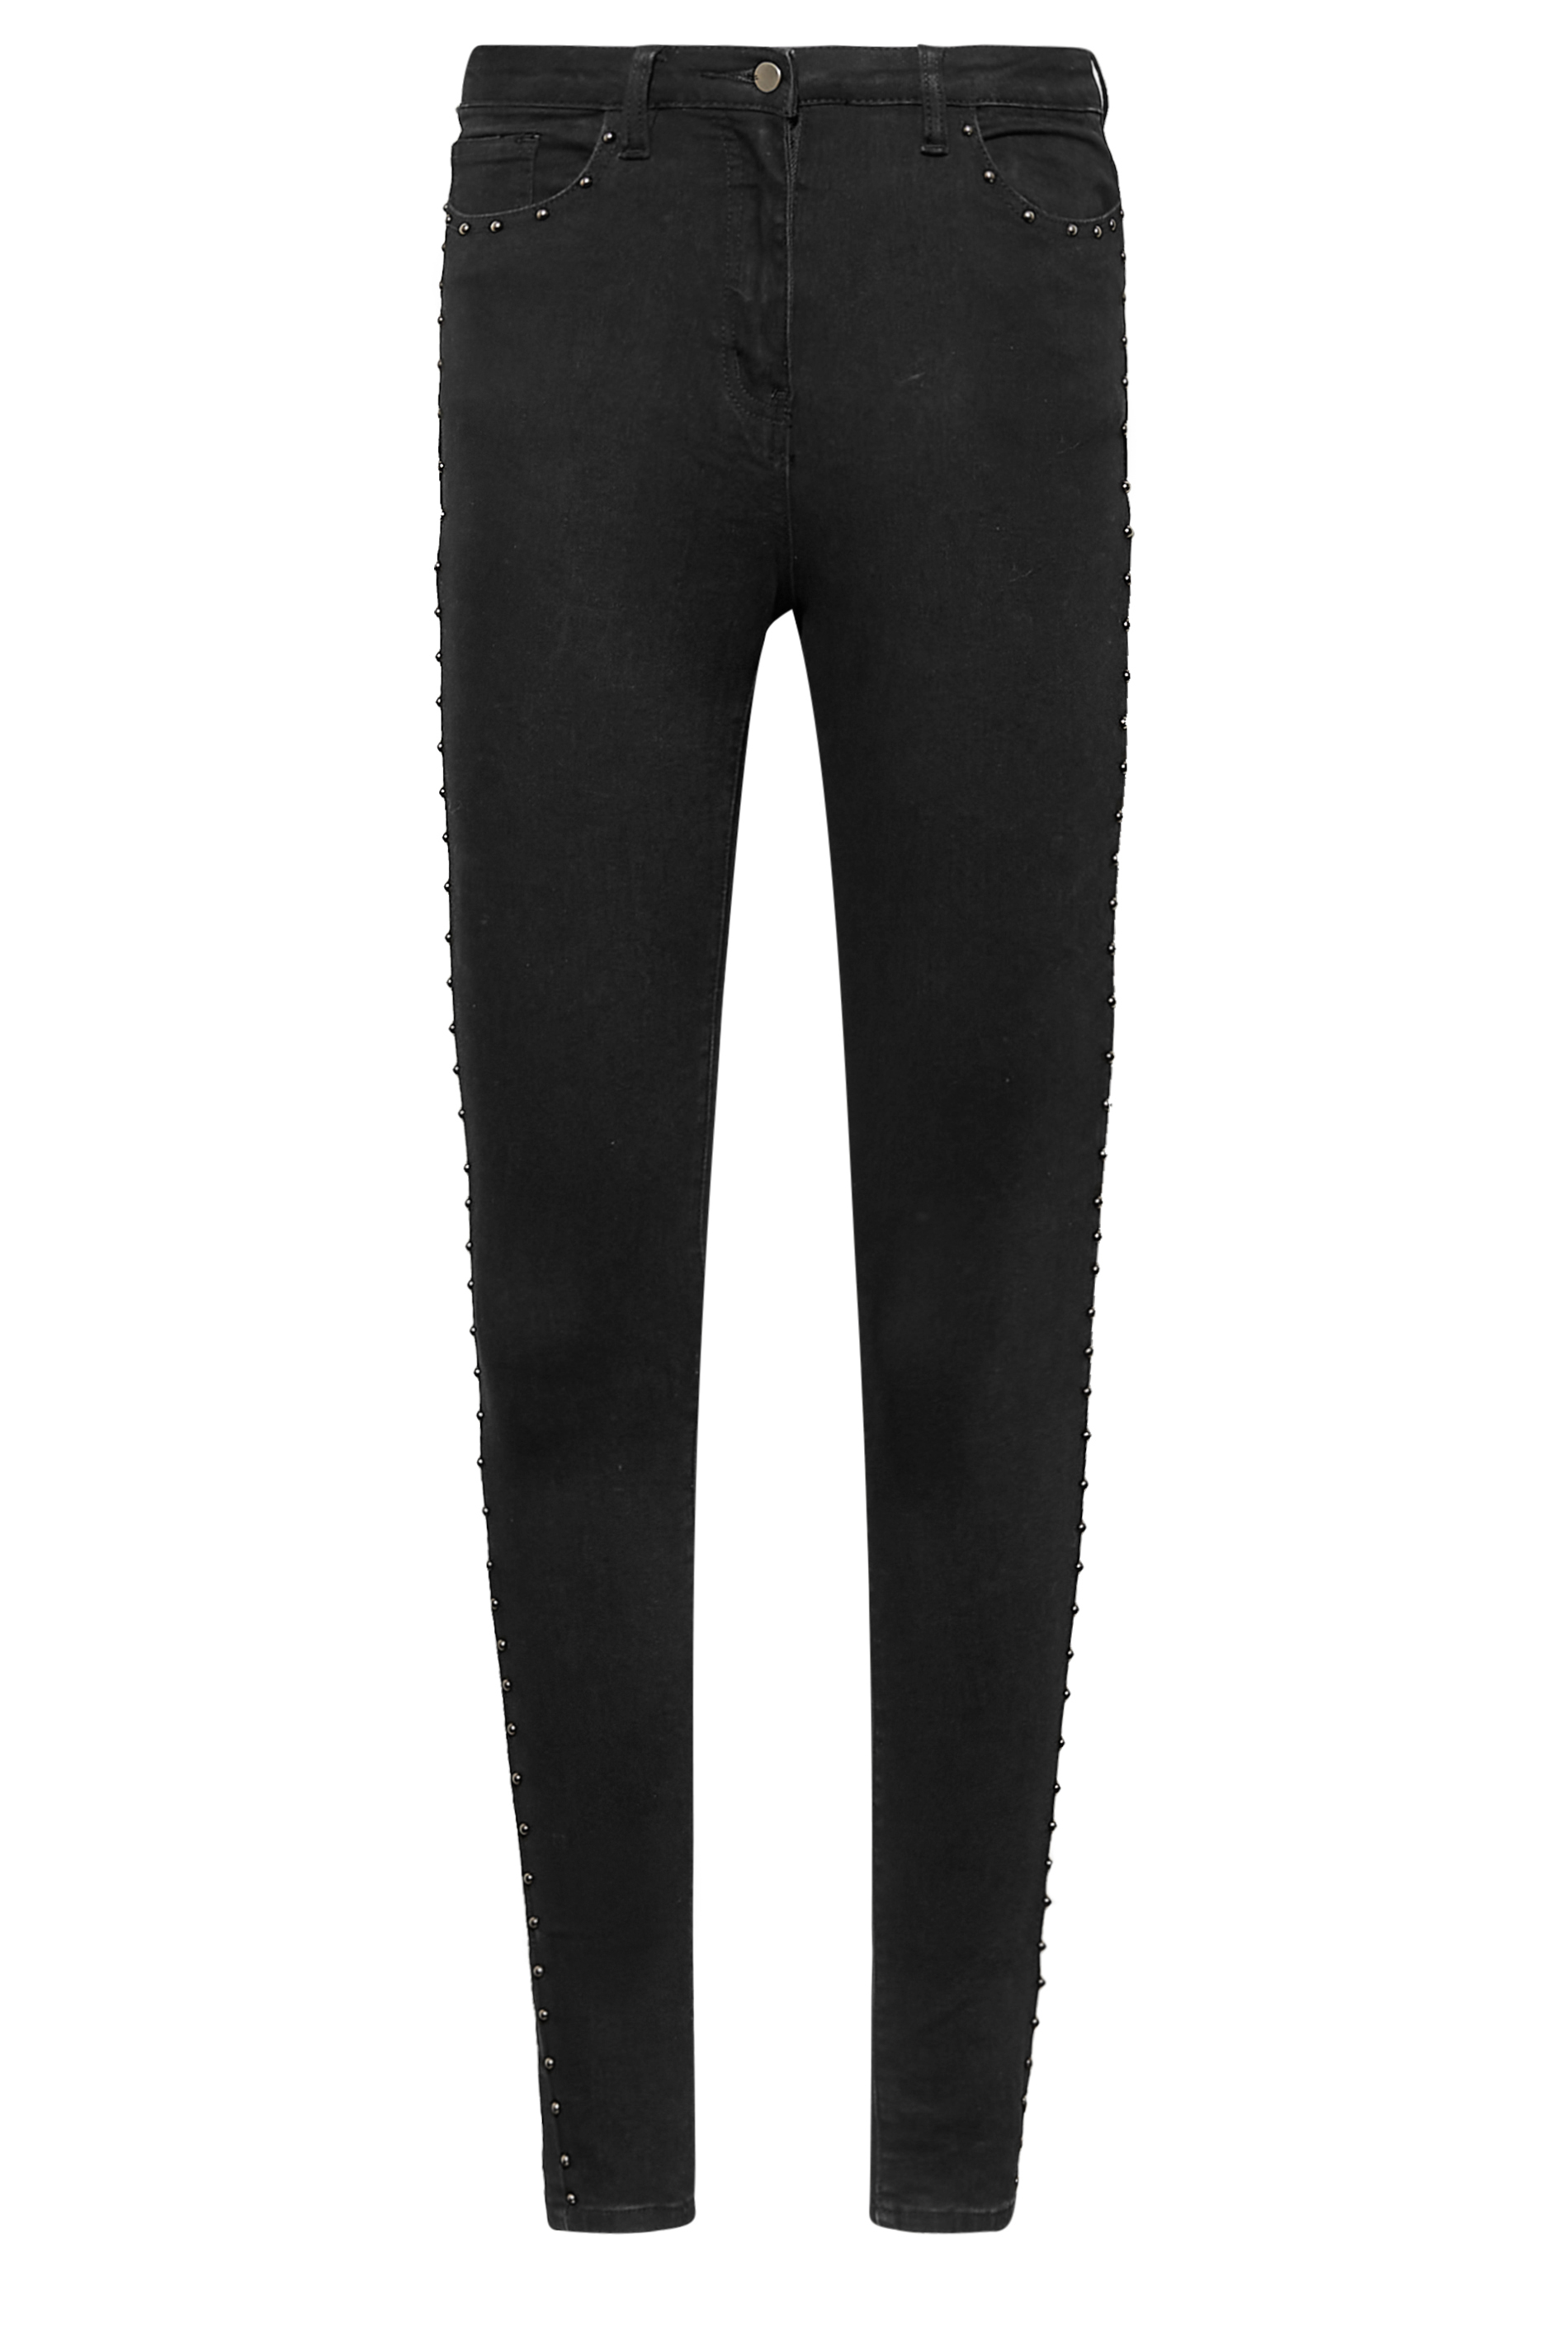 LTS Tall Women's Black Studded AVA Skinny Jeans | Long Tall Sally 2